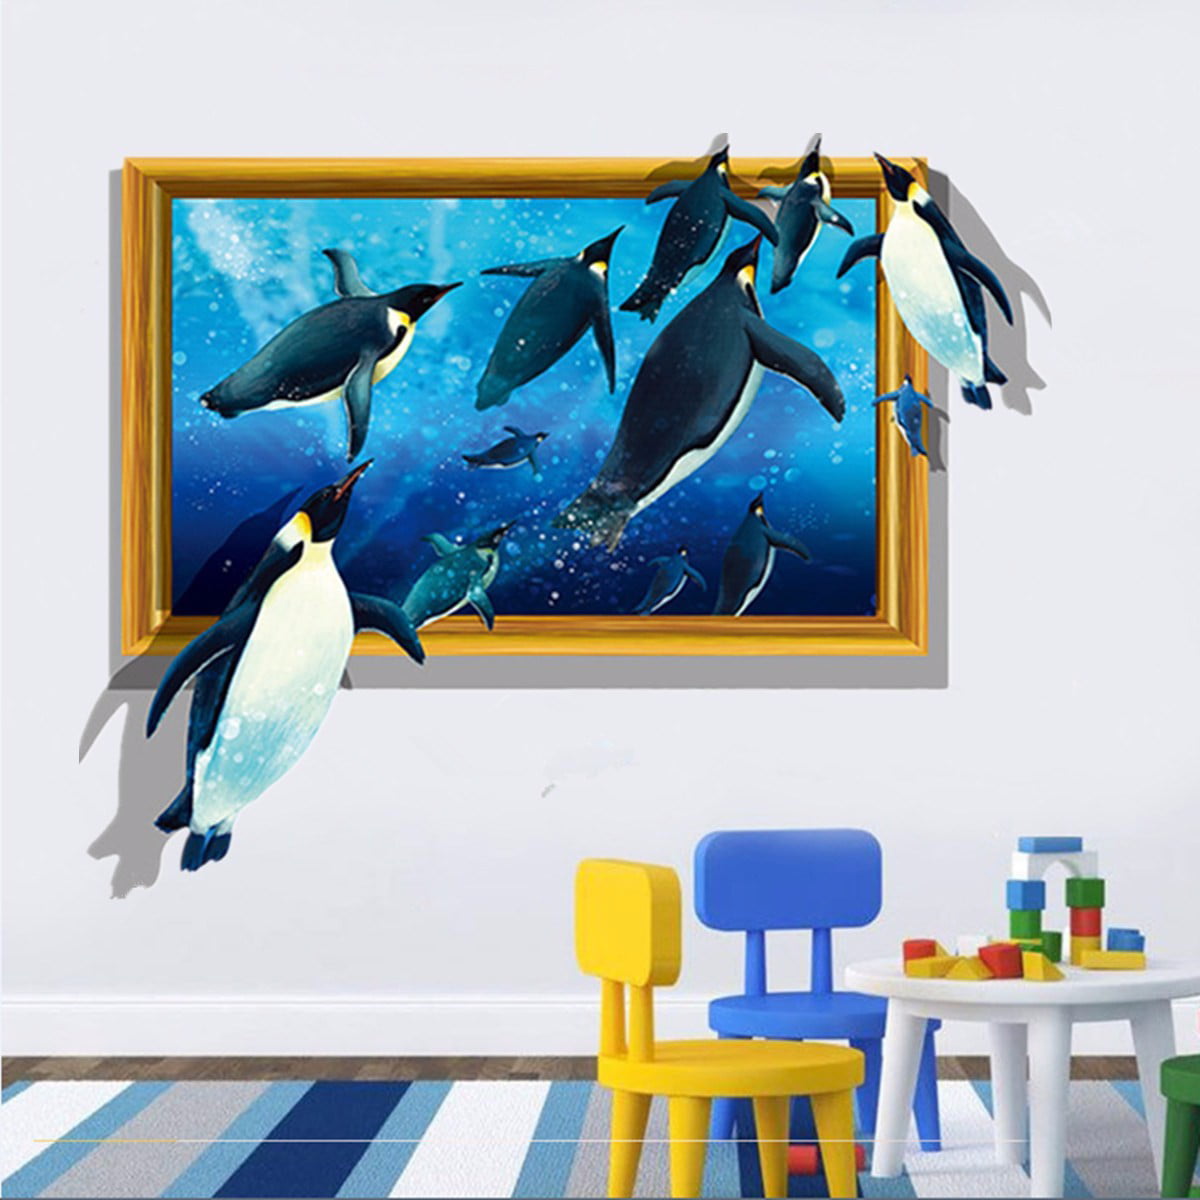 3D Ocean Removable Vinyl Decal Wall Sticker Art Mural Room Home Decor